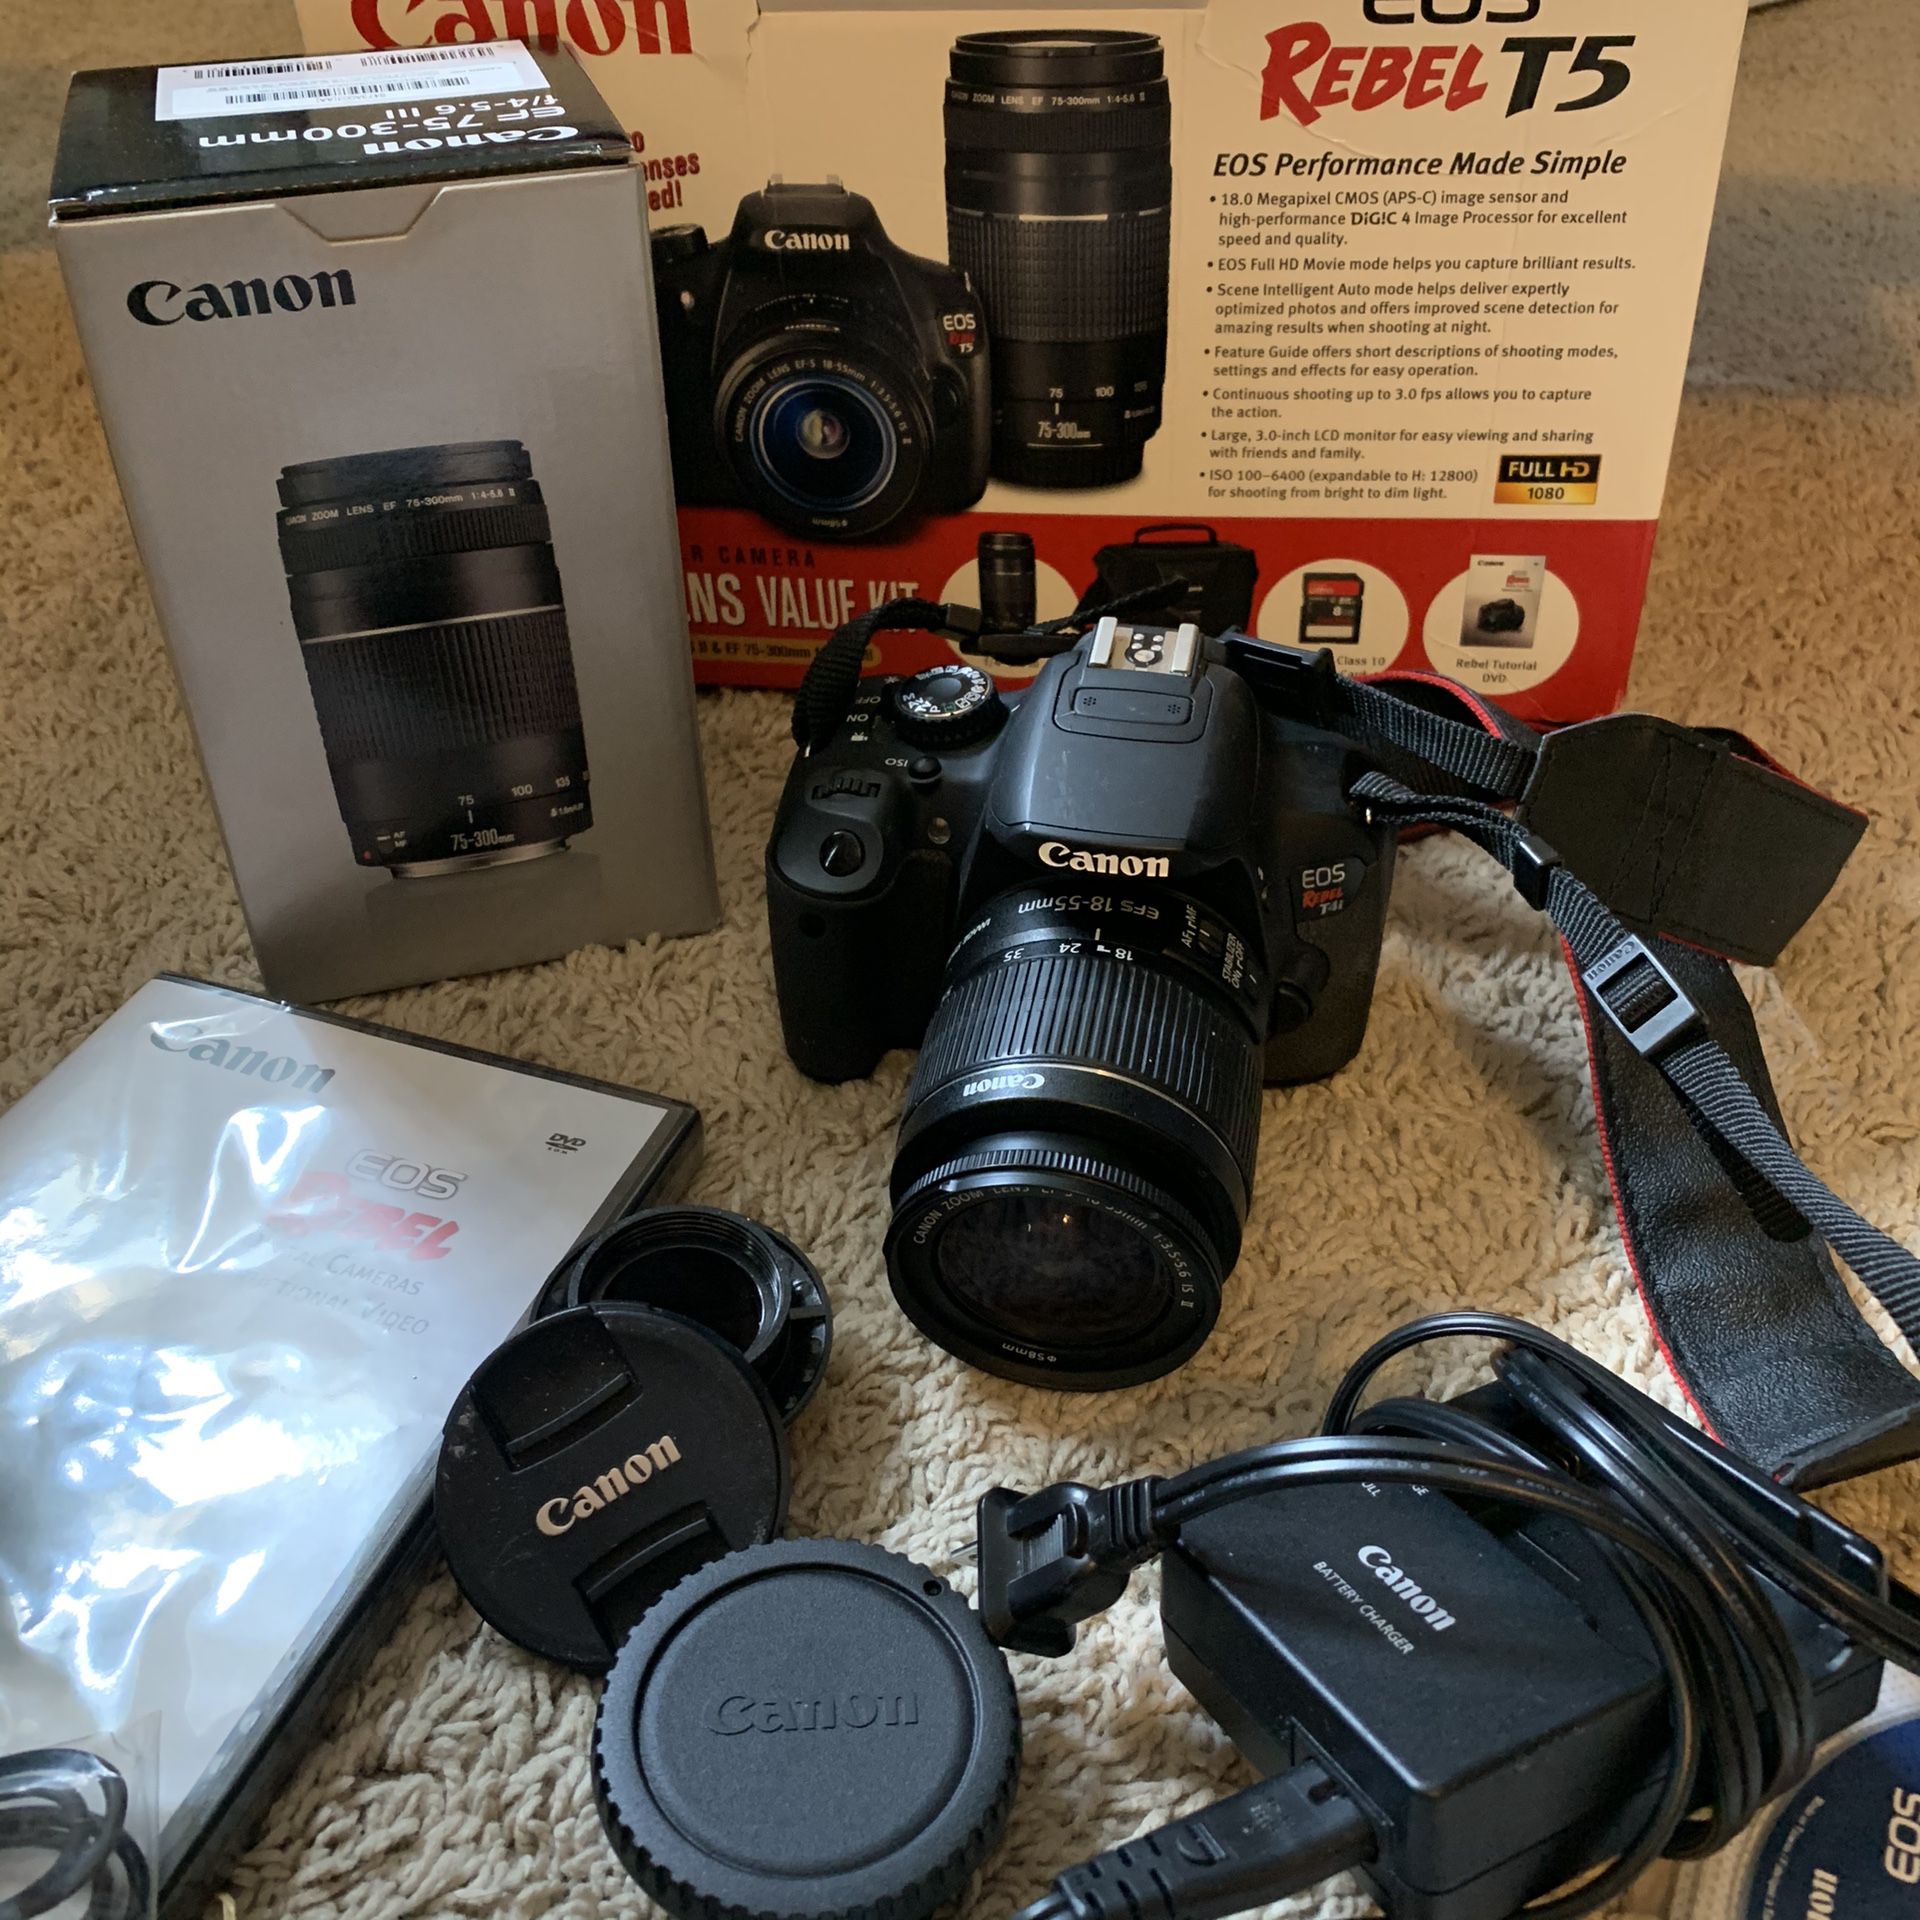 Rebel T5 camera for sale